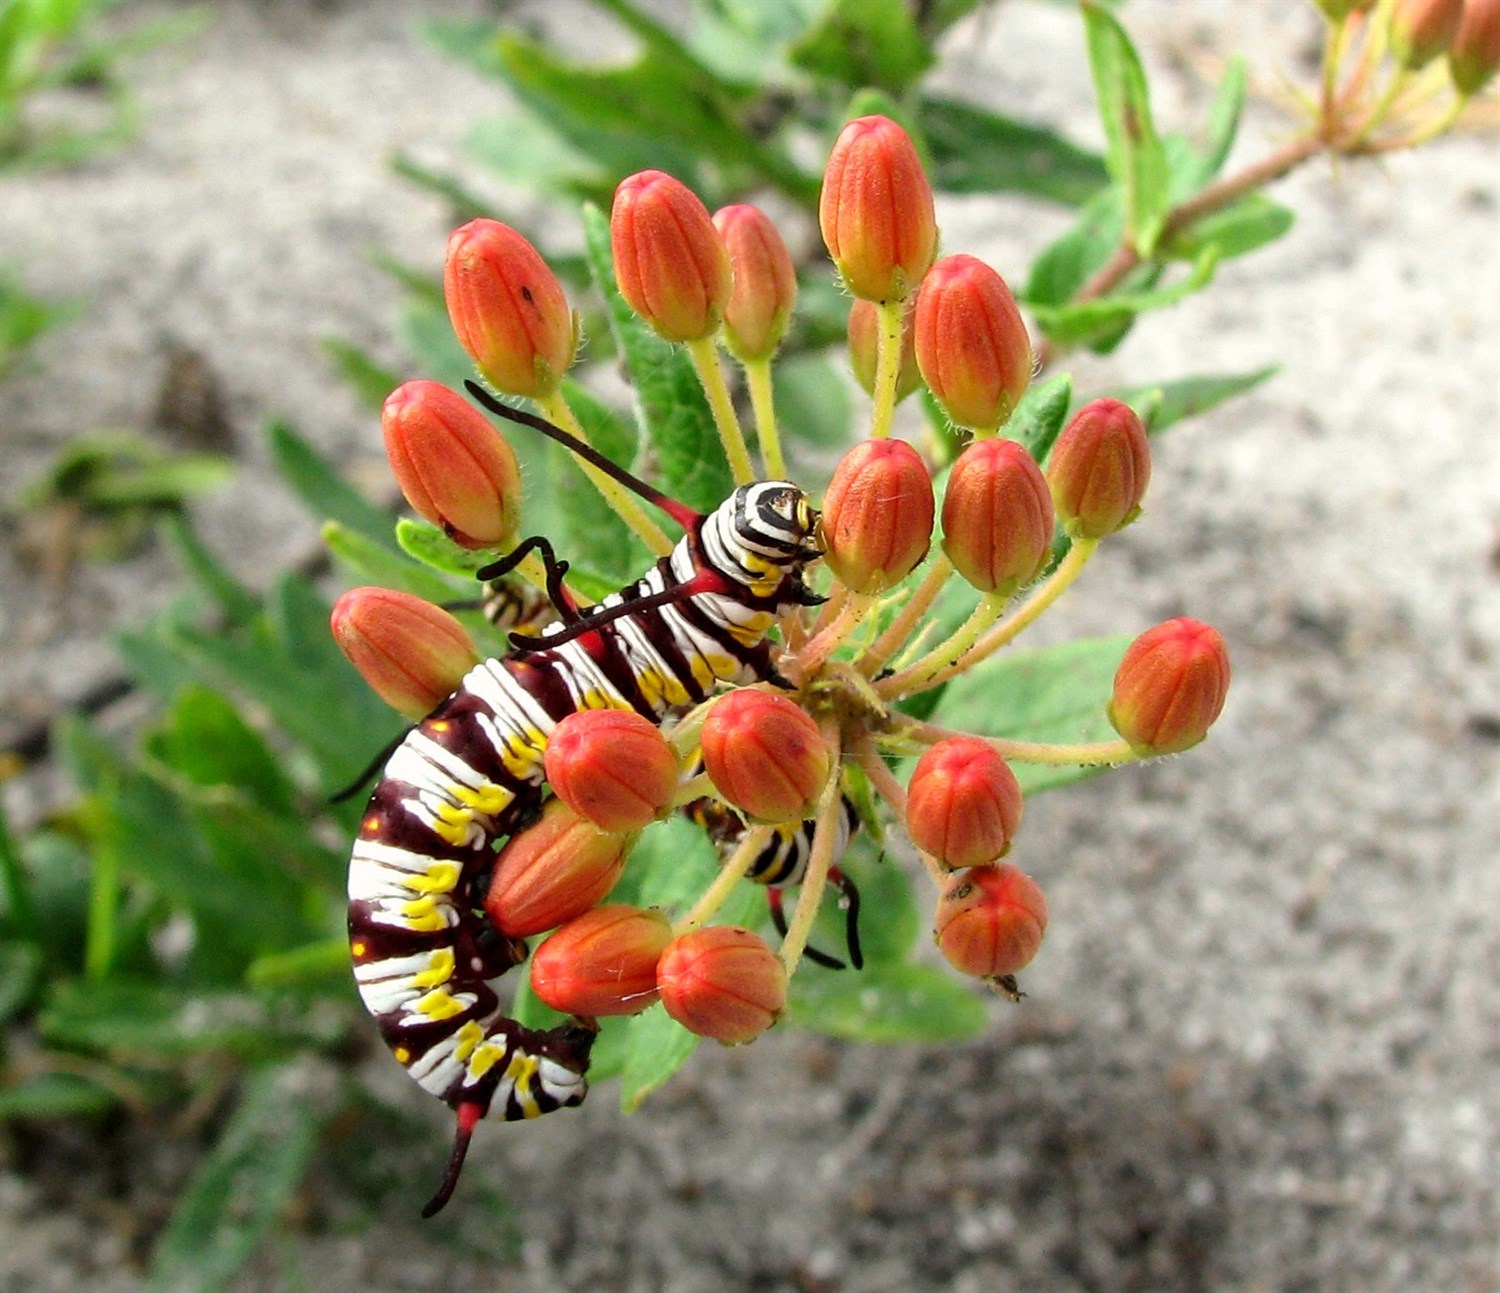 Plant milkweed; save the monarch.